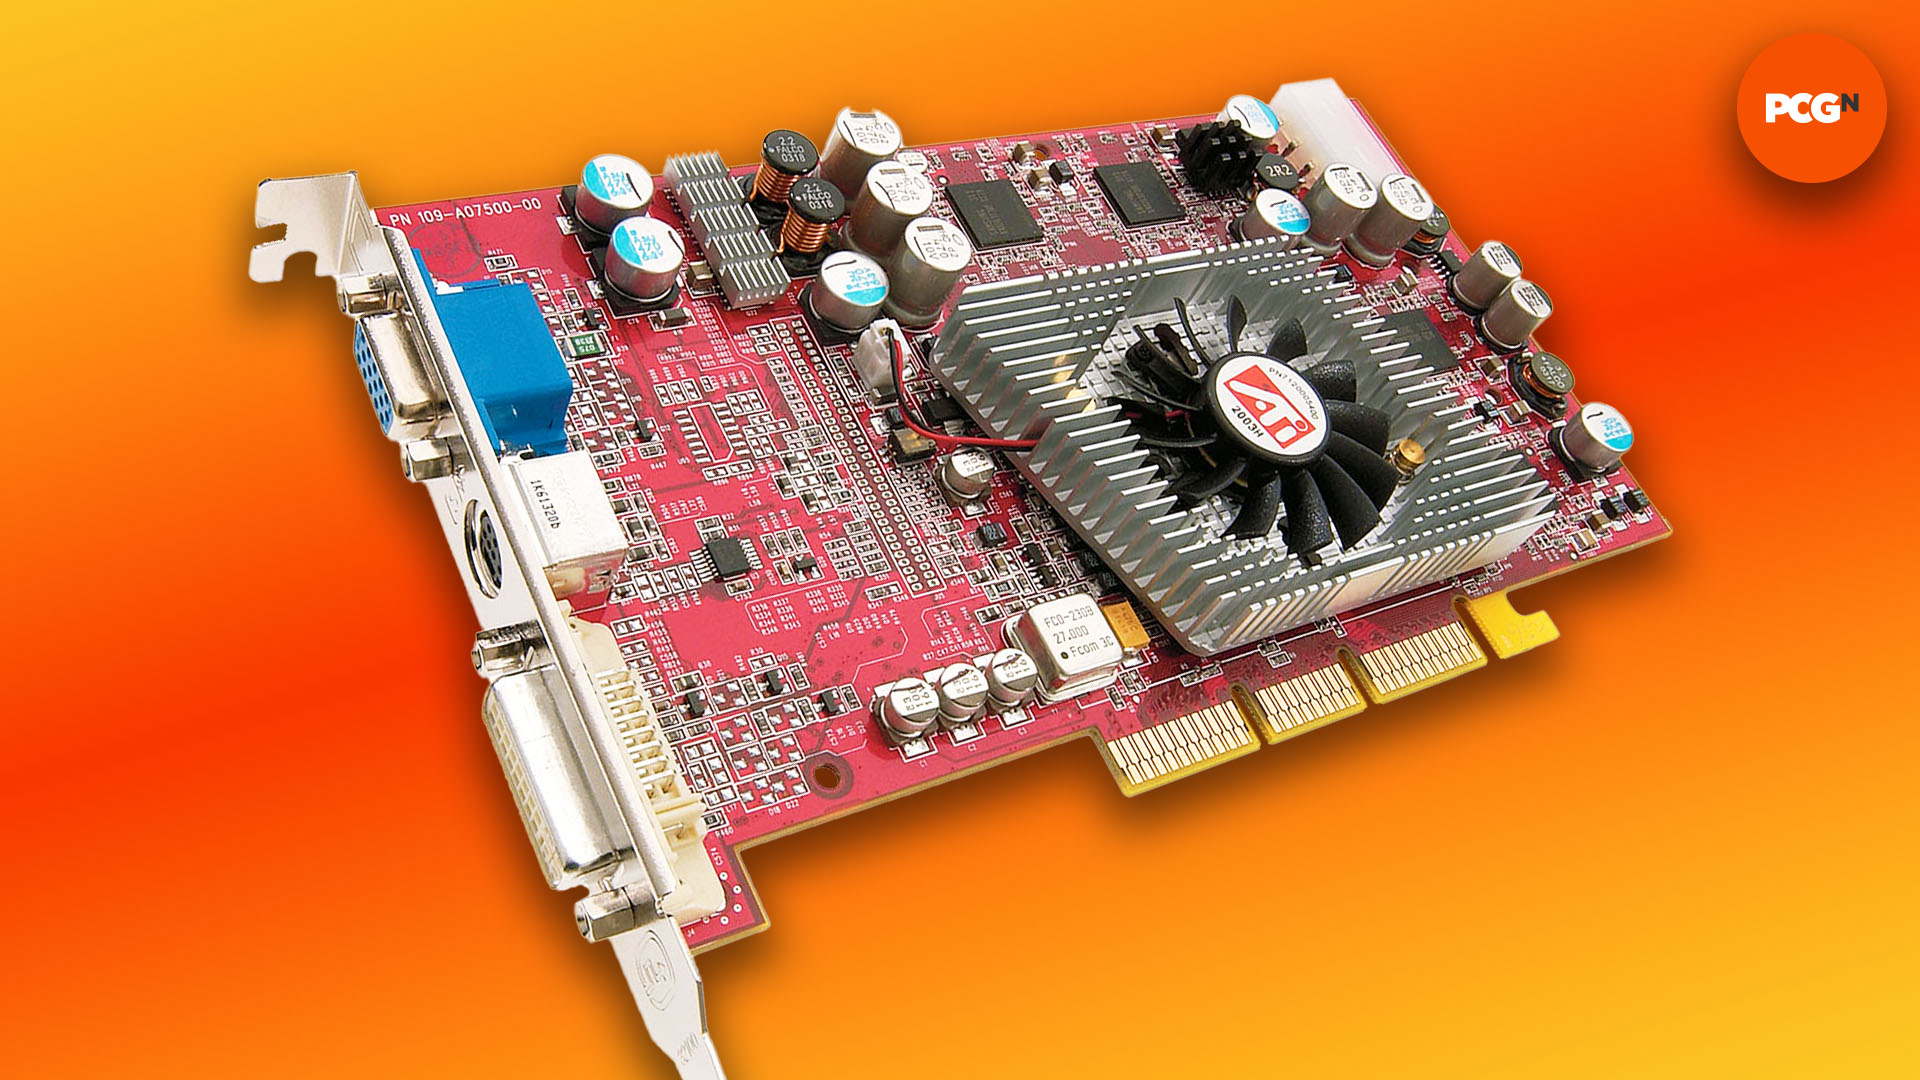 Nvidia GeForce FX 5800 Ultra: ATi Radeon 9800 Pro graphics card